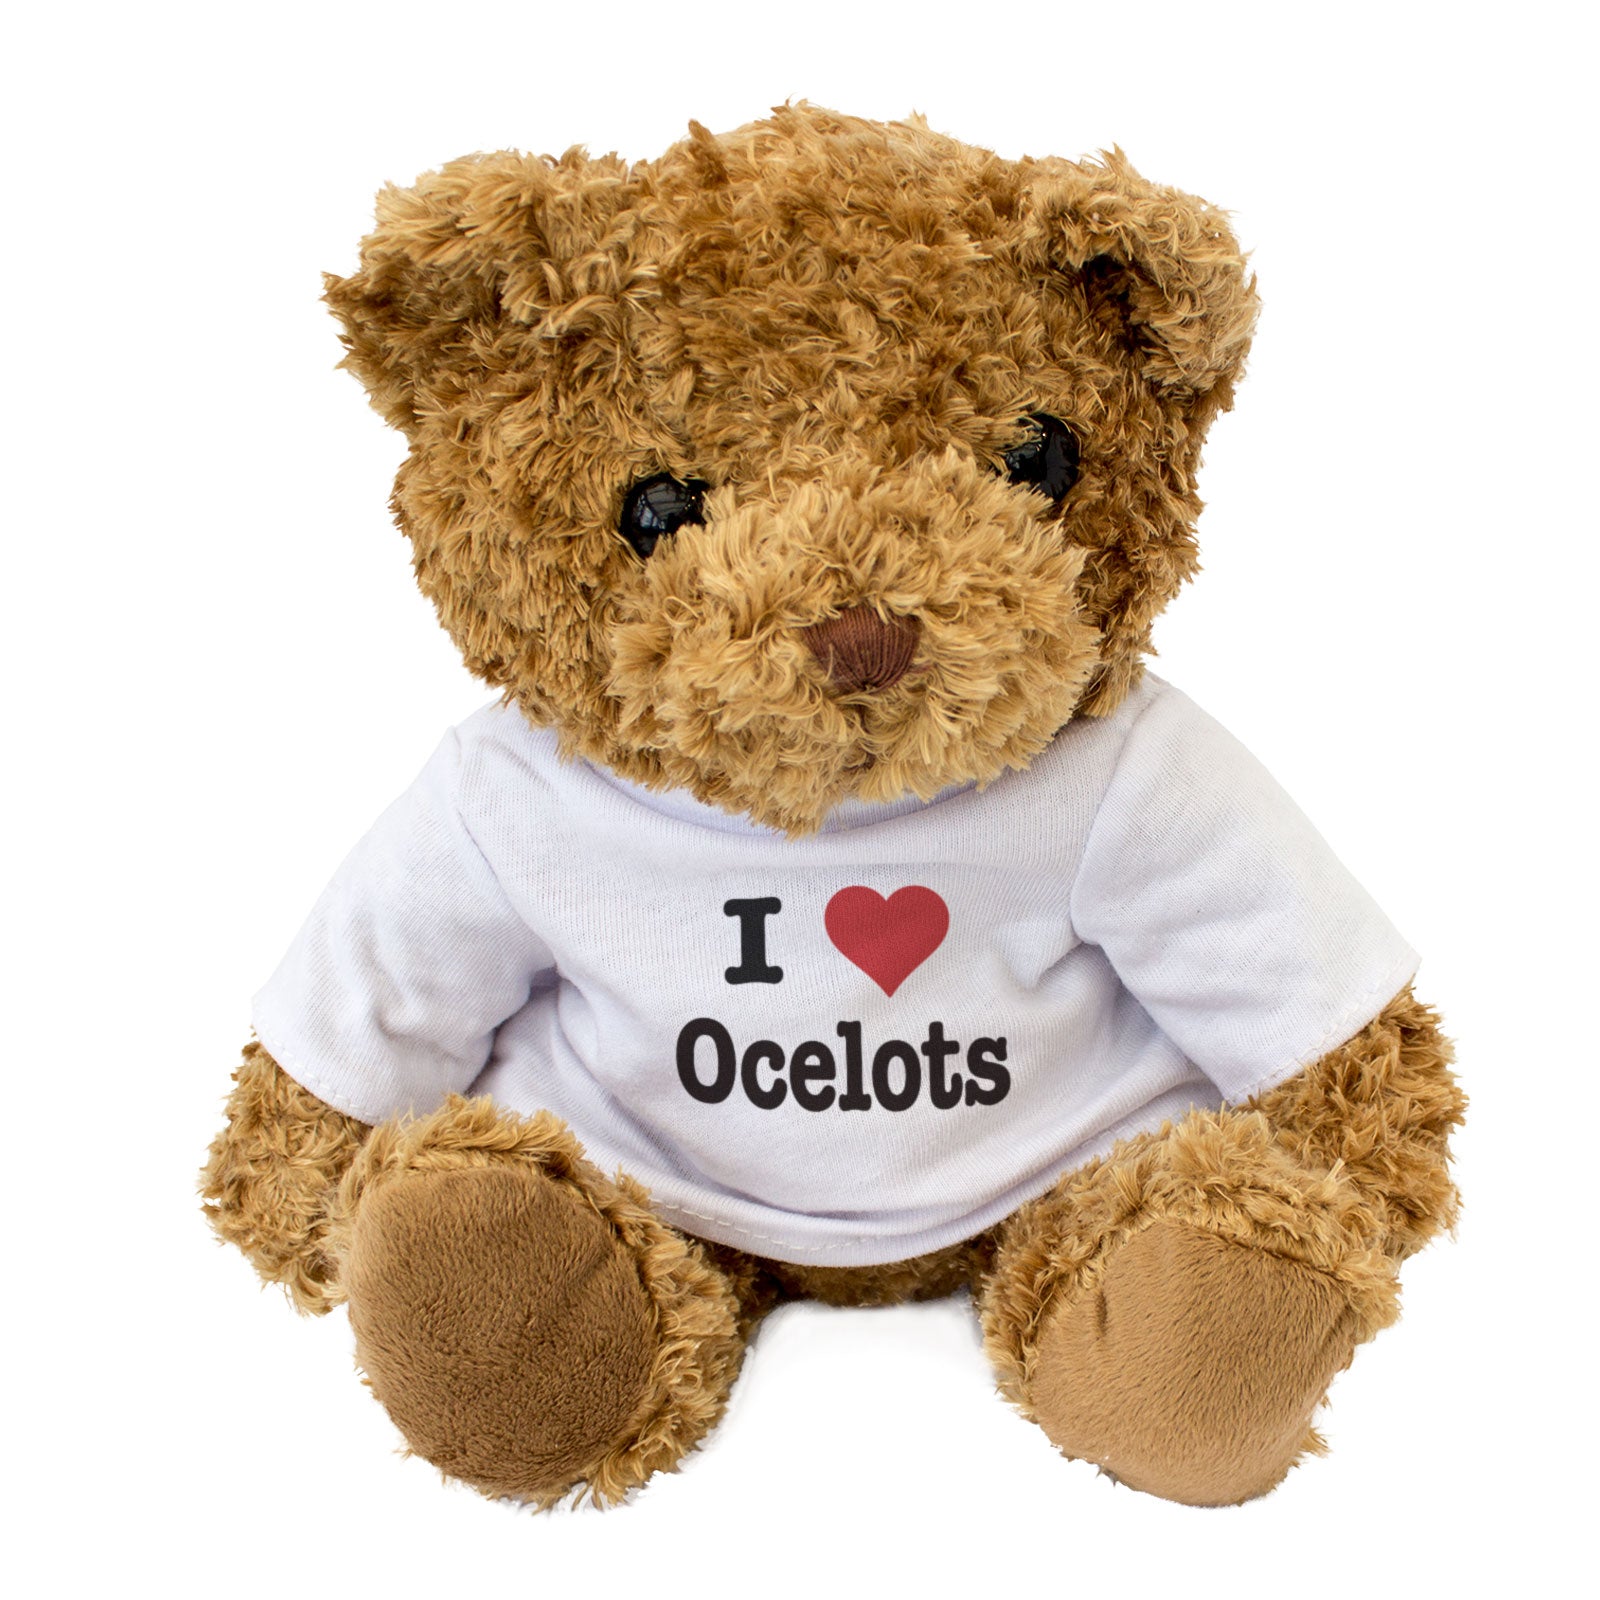 I Love Ocelots - Teddy Bear